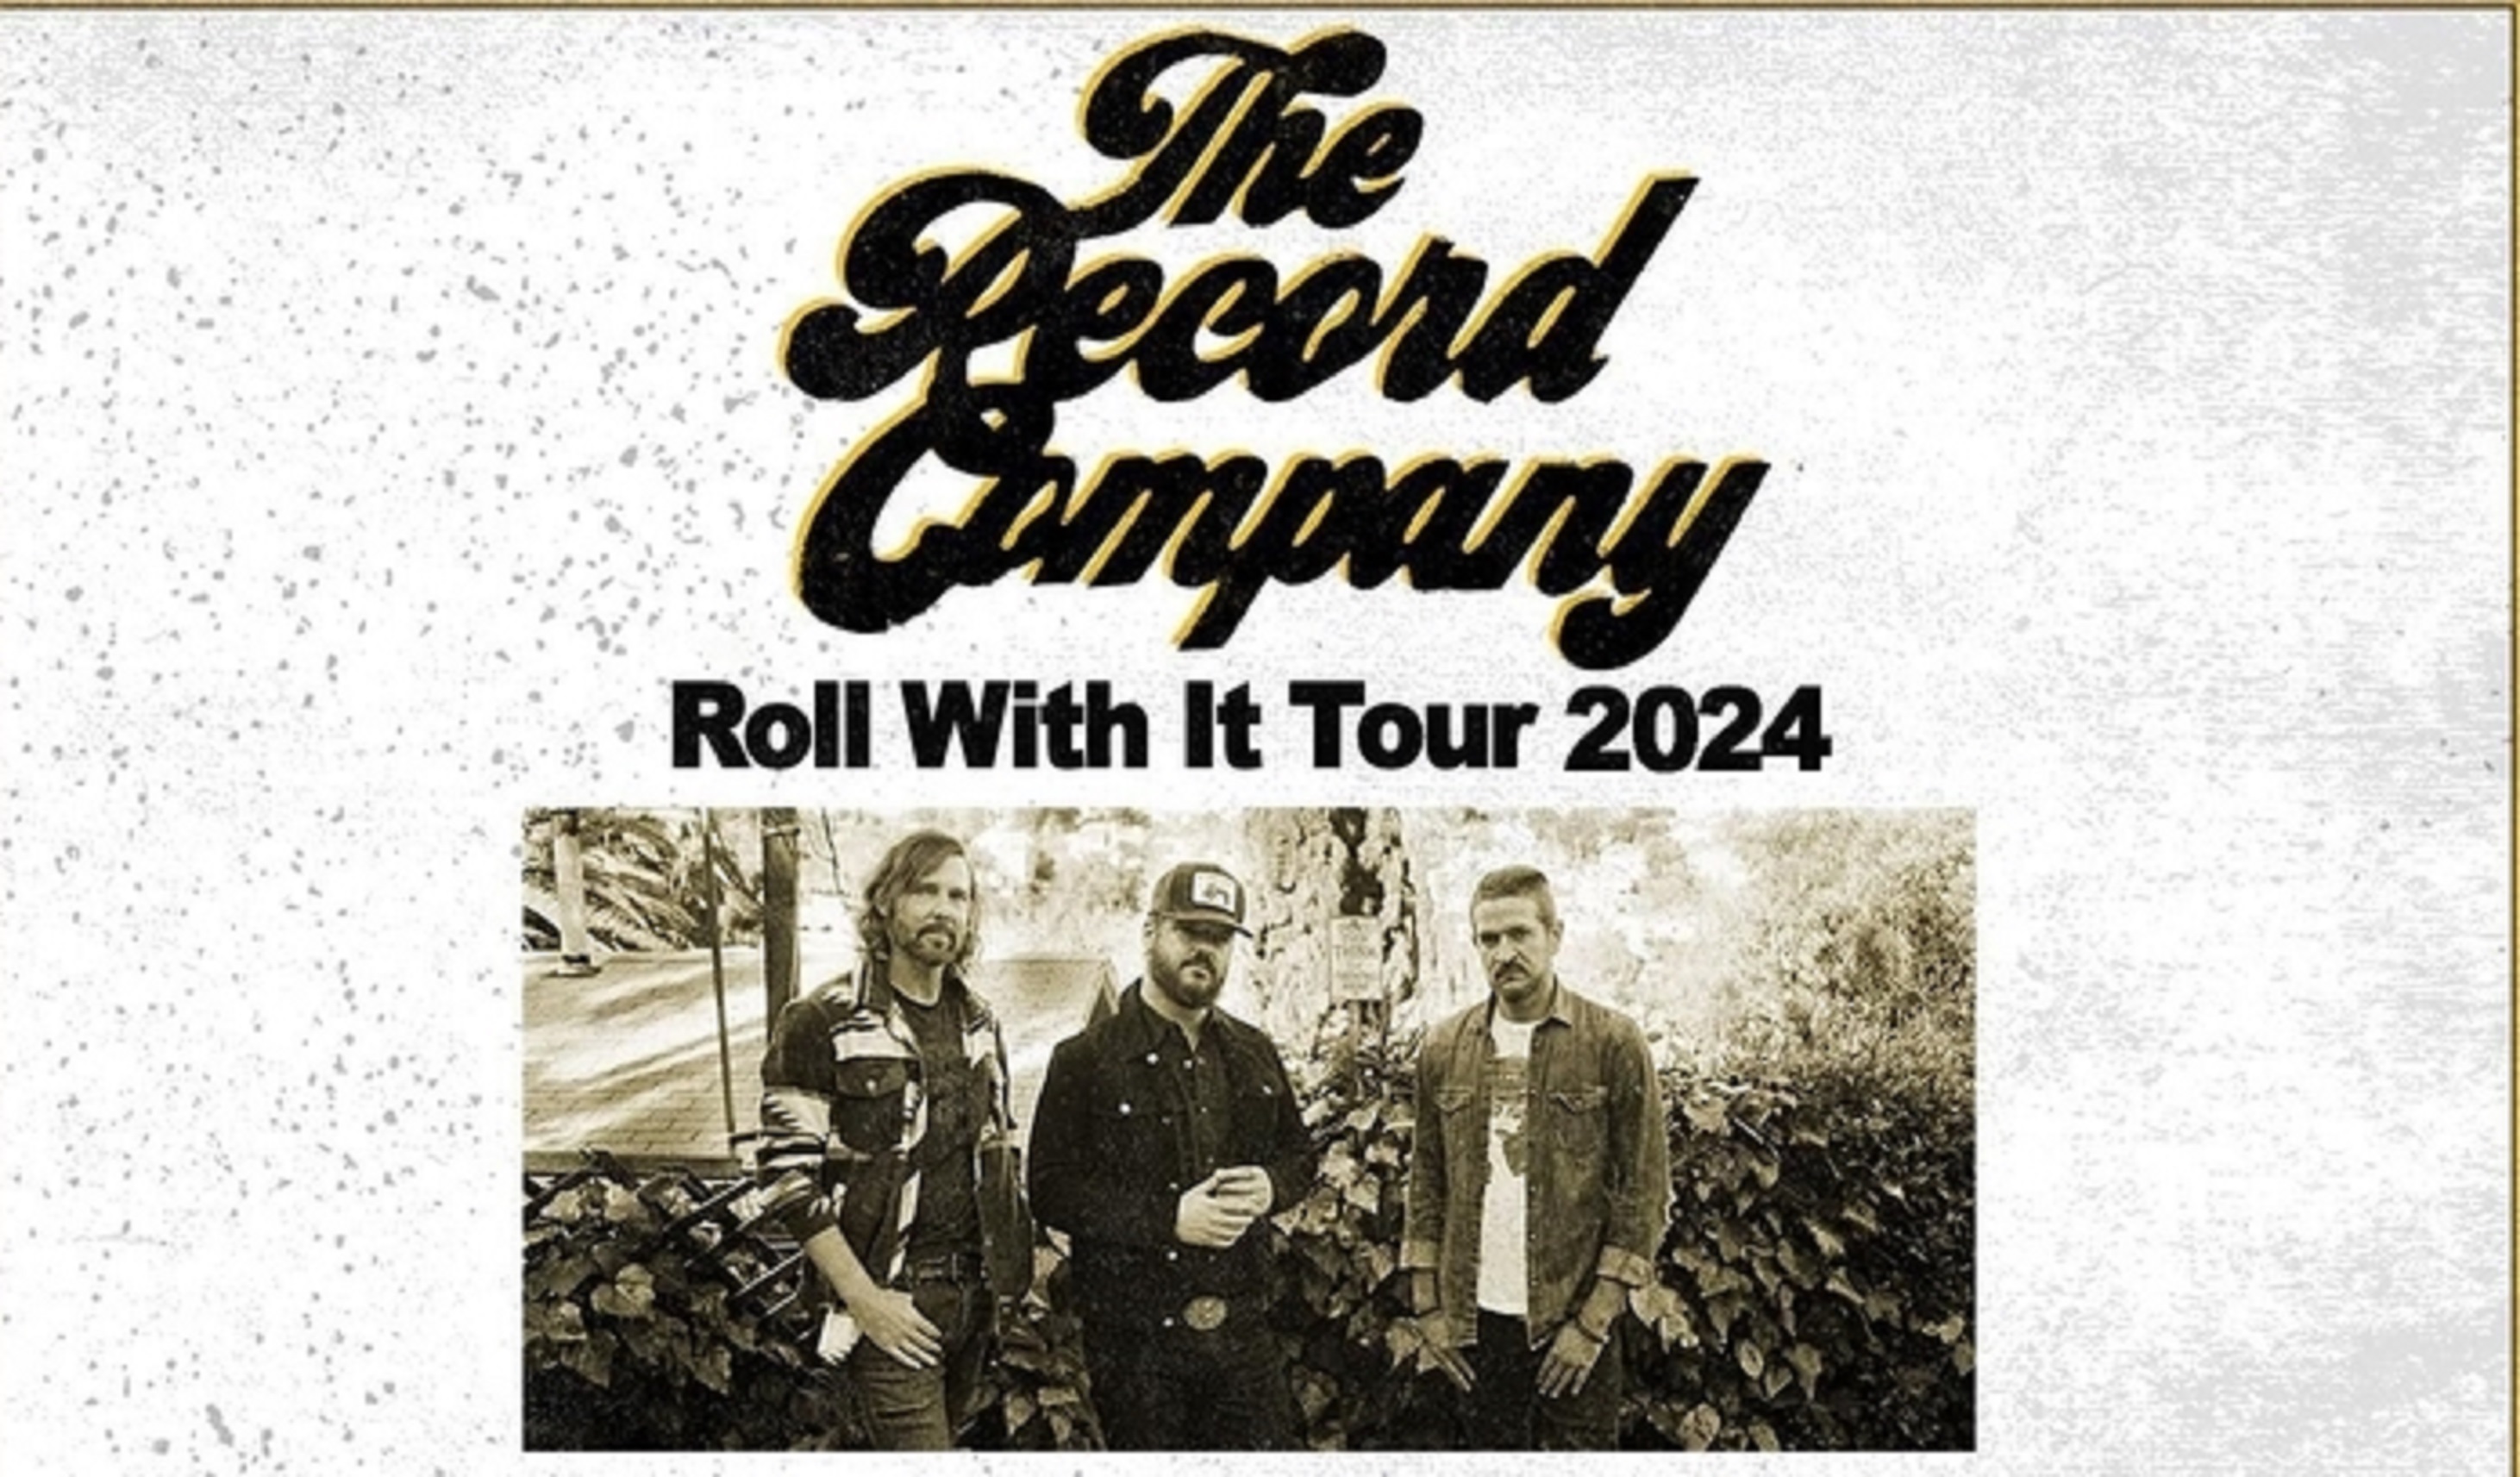 Bob Seger 2024 Tour Experience the Legendary Rocker Live!